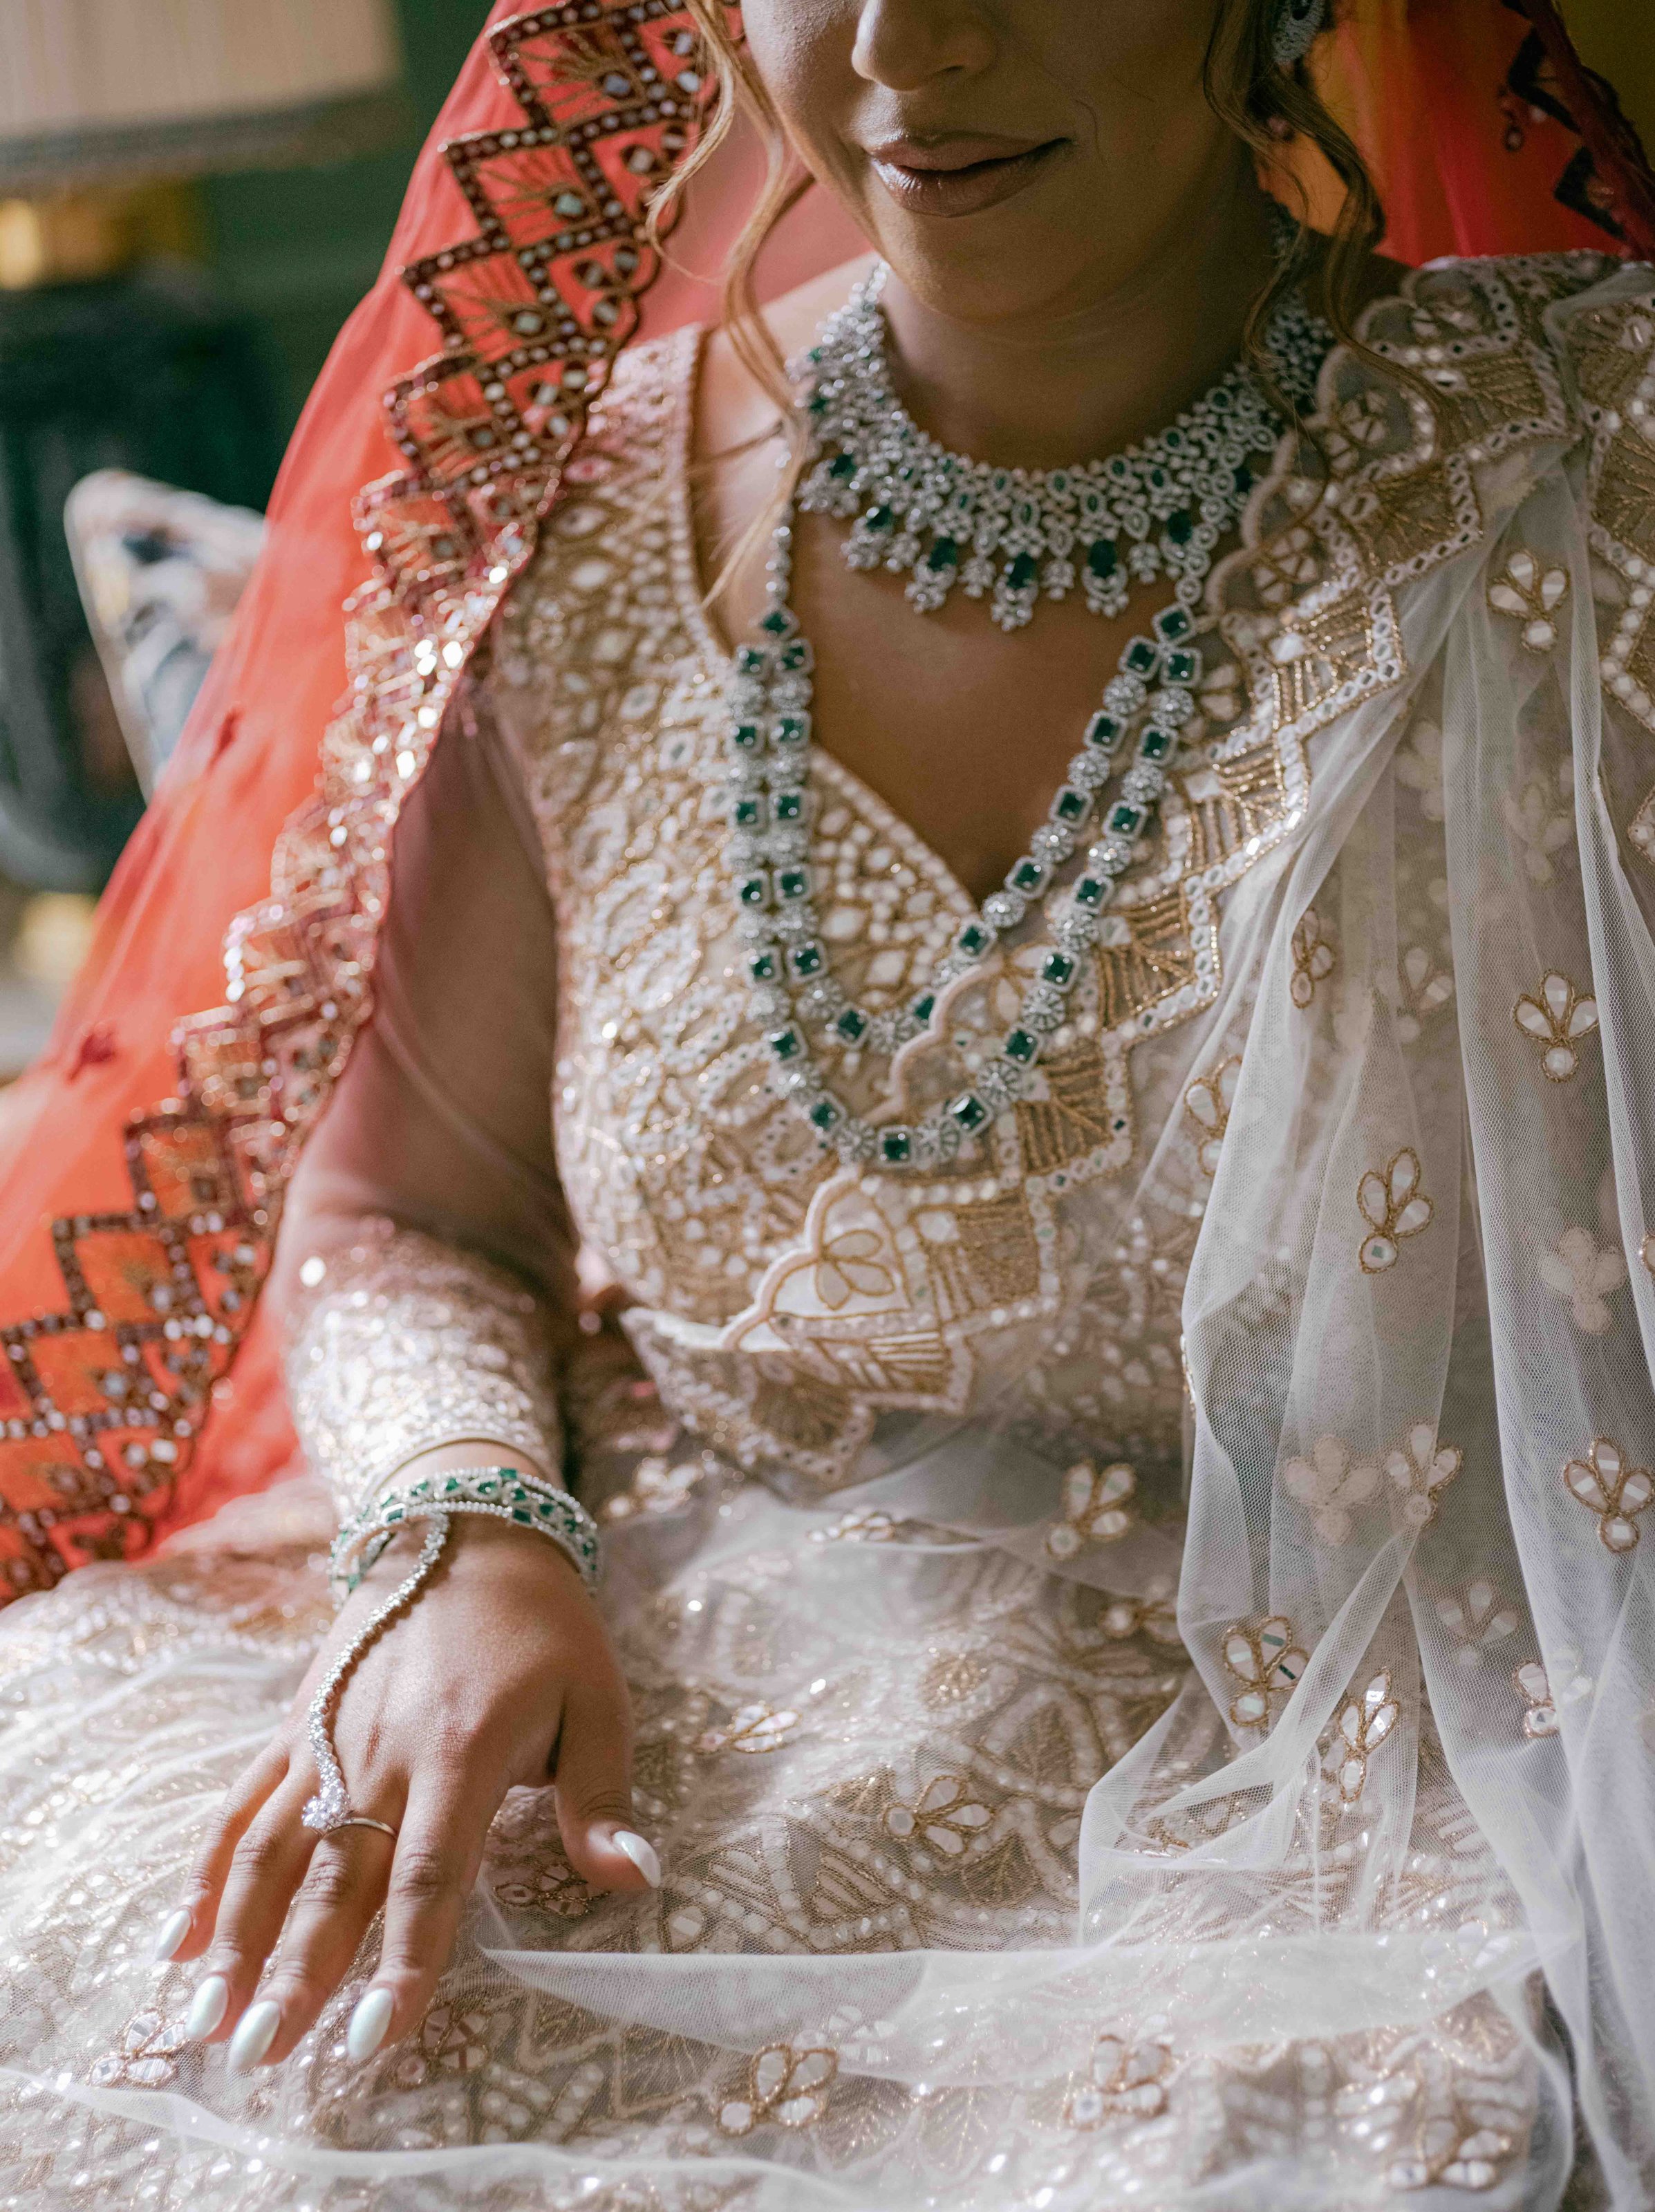  details of the bride dress 